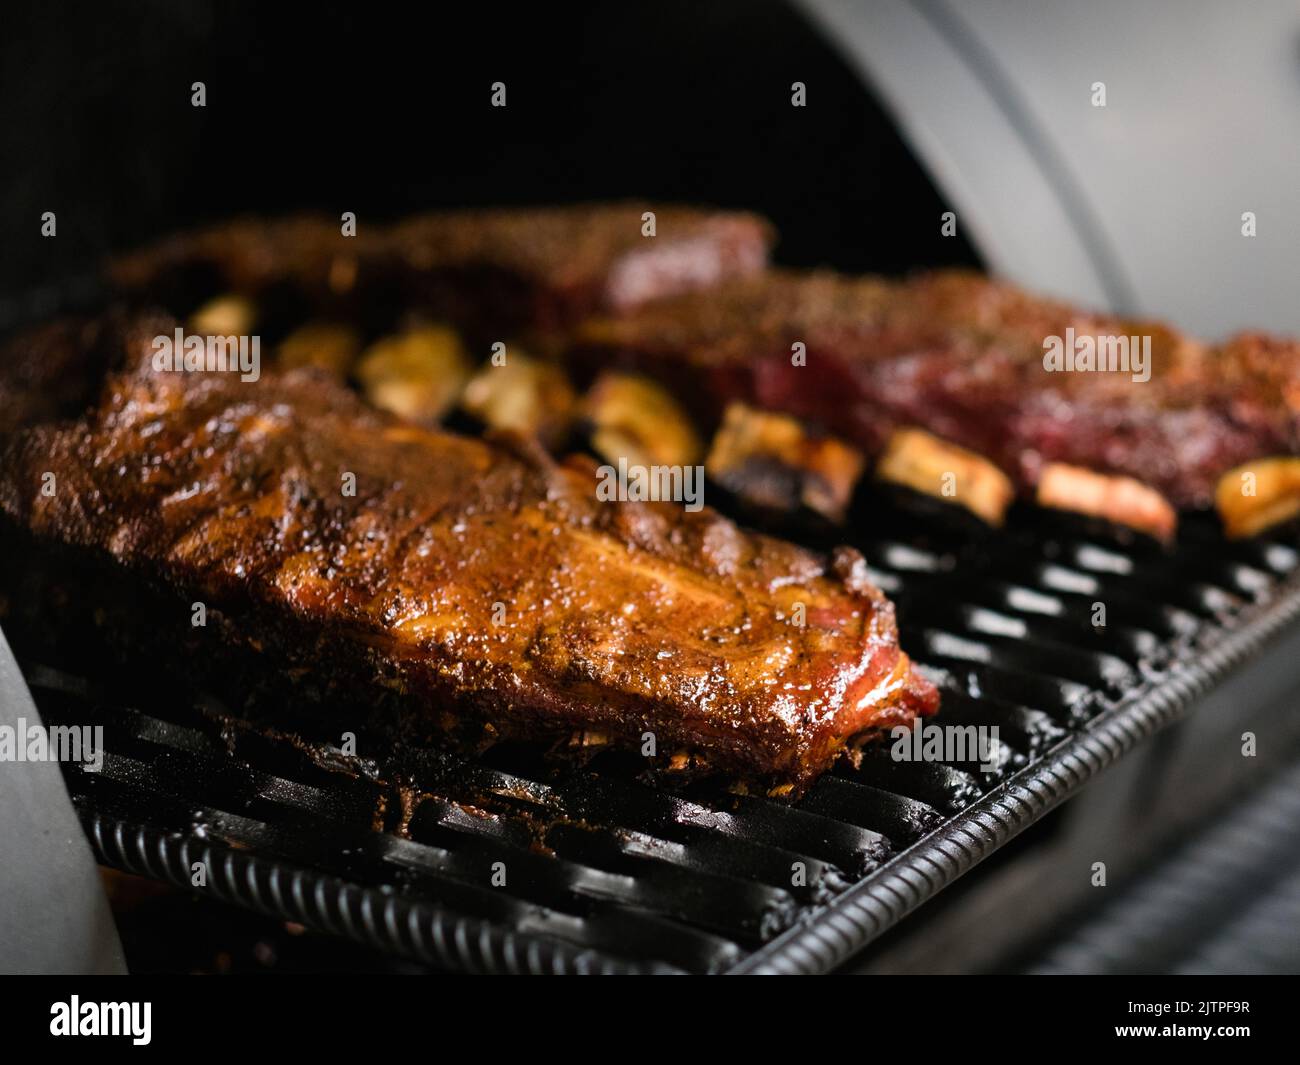 professional kitchen appliance ribs bbq smoker Stock Photo